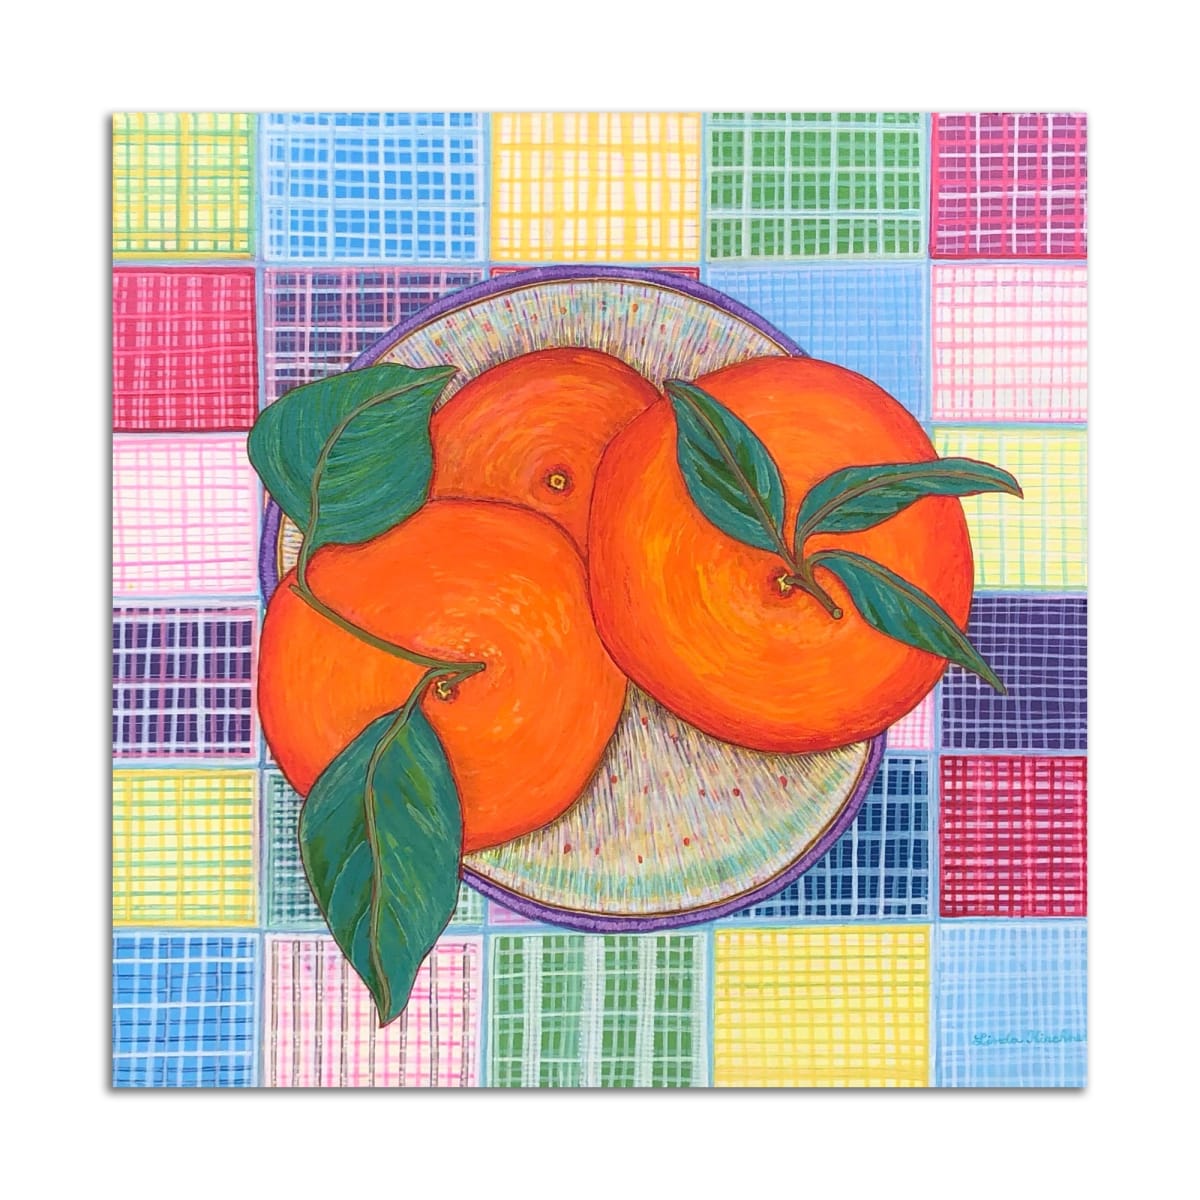 Delanie's Peaches by Linda Kirchner 